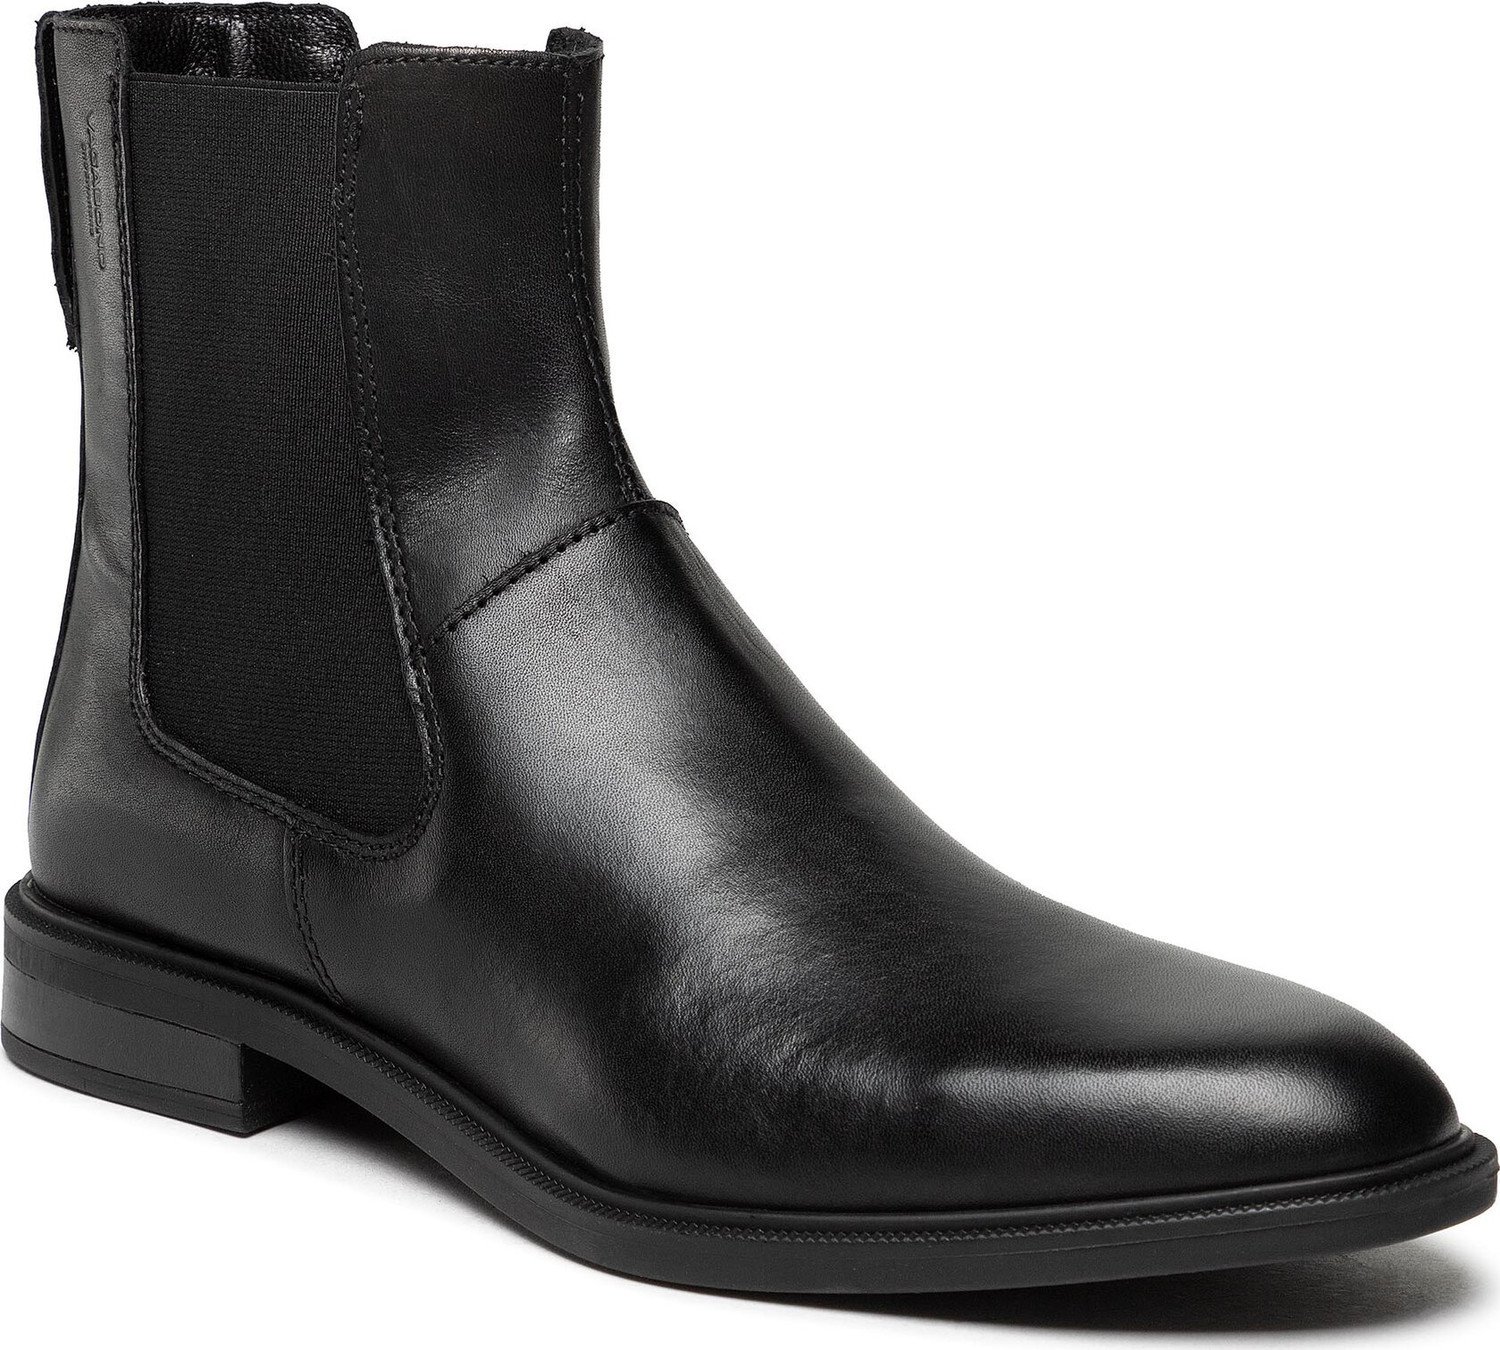 Kotníková obuv s elastickým prvkem Vagabond Frances 2. 5406-001-20 Black